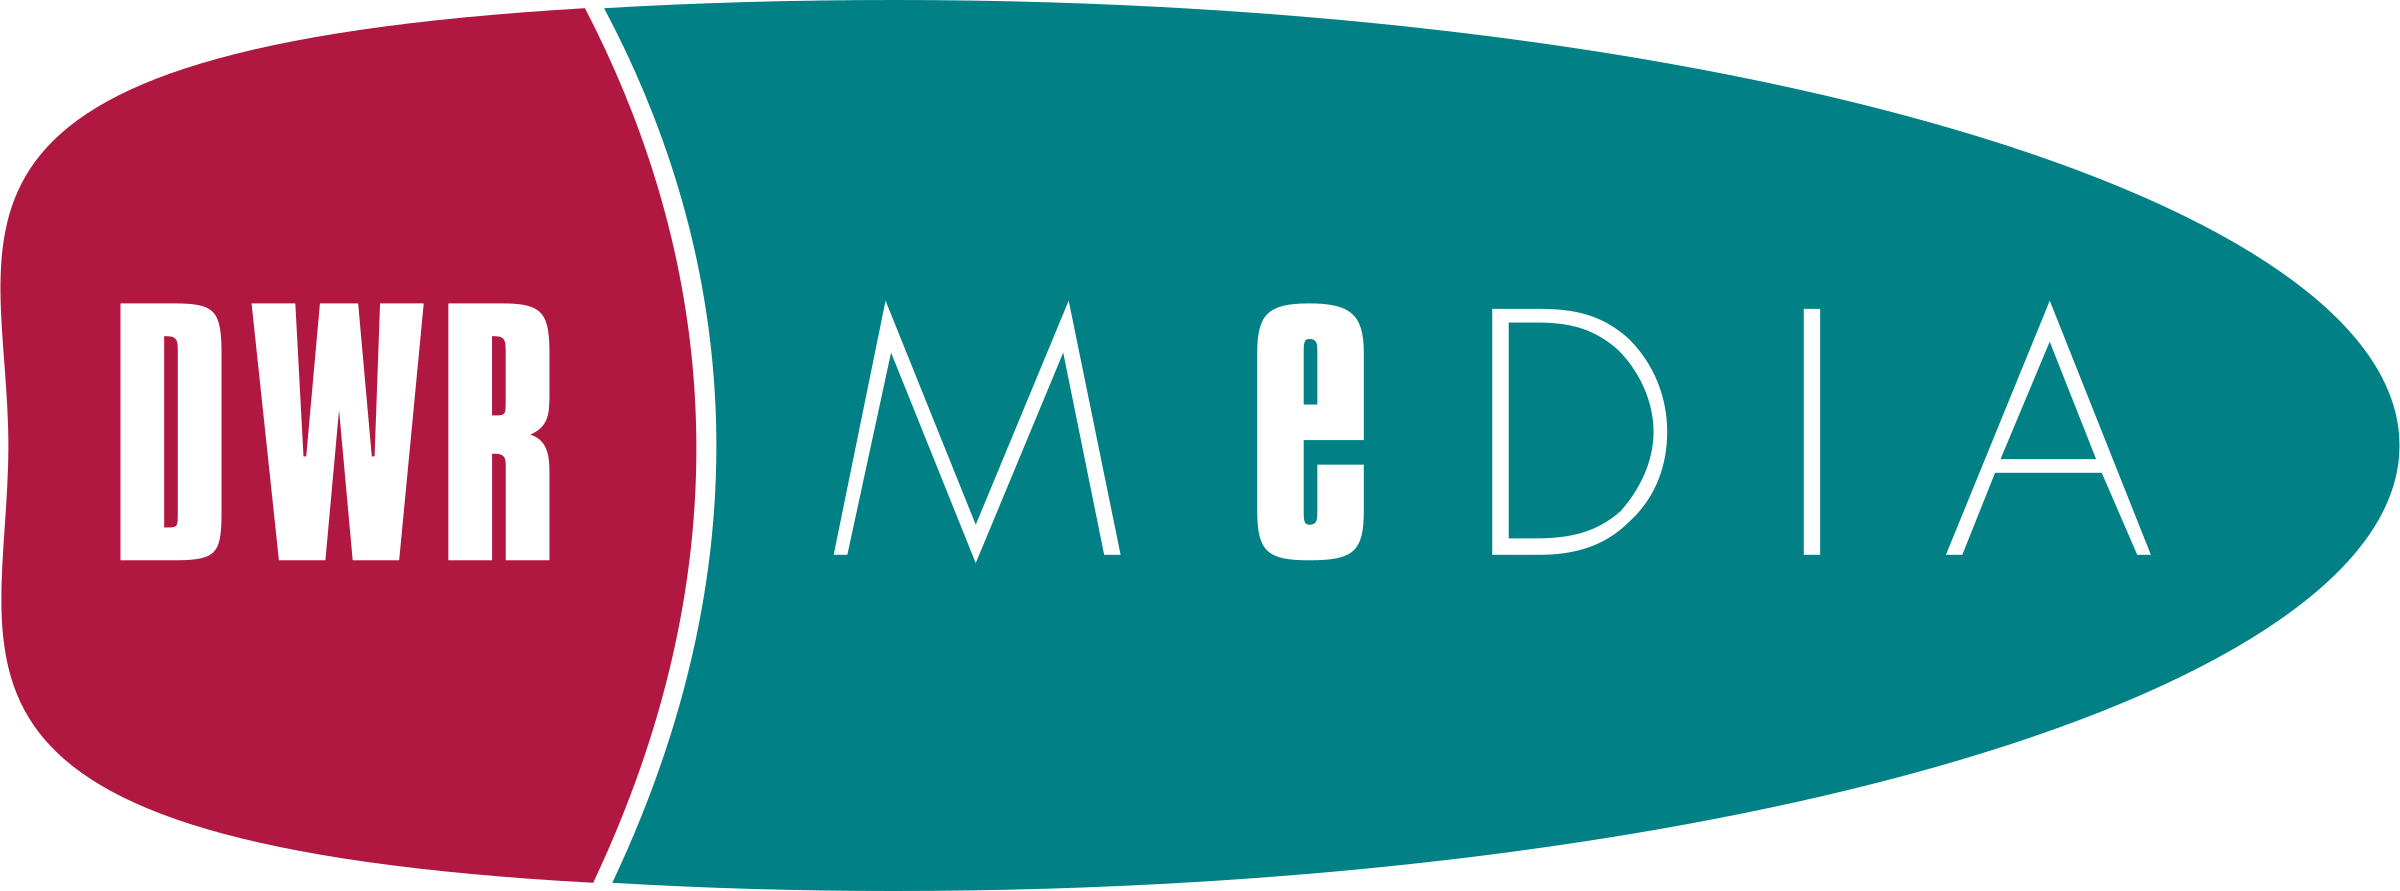 DWR Logo - DWR MEDIA Logo PNG Transparent & SVG Vector - Freebie Supply